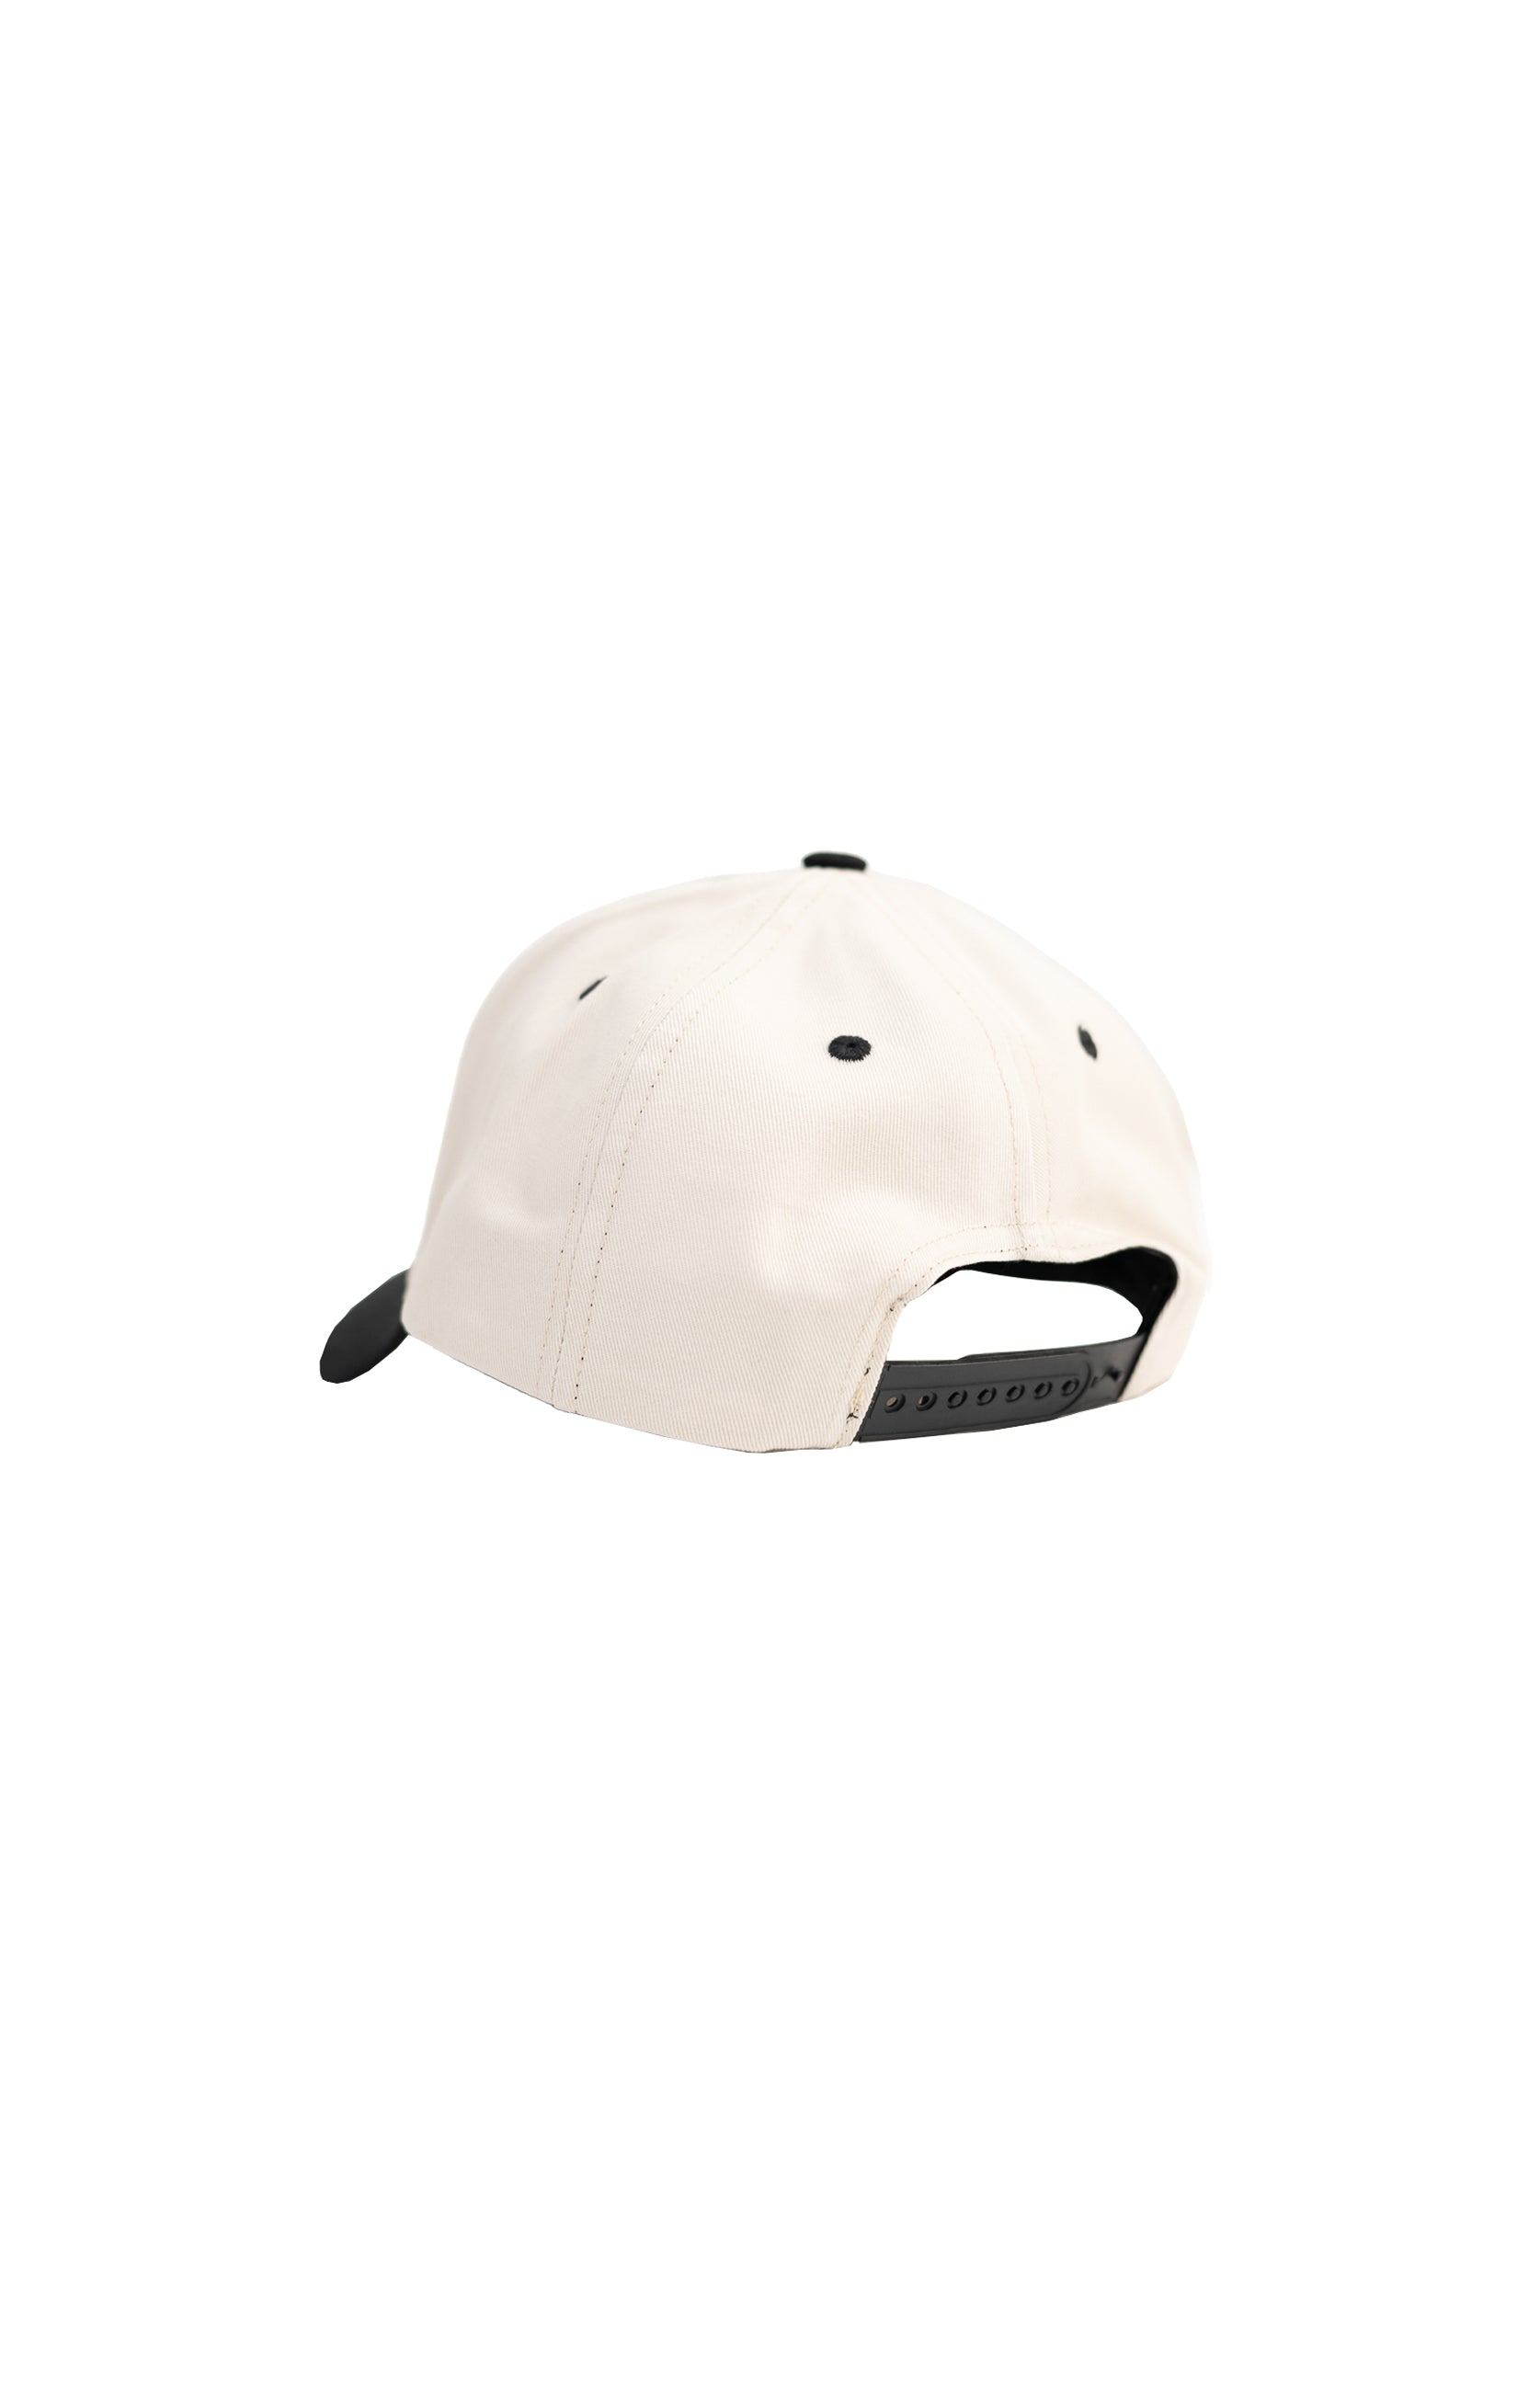 White cap with black shield 